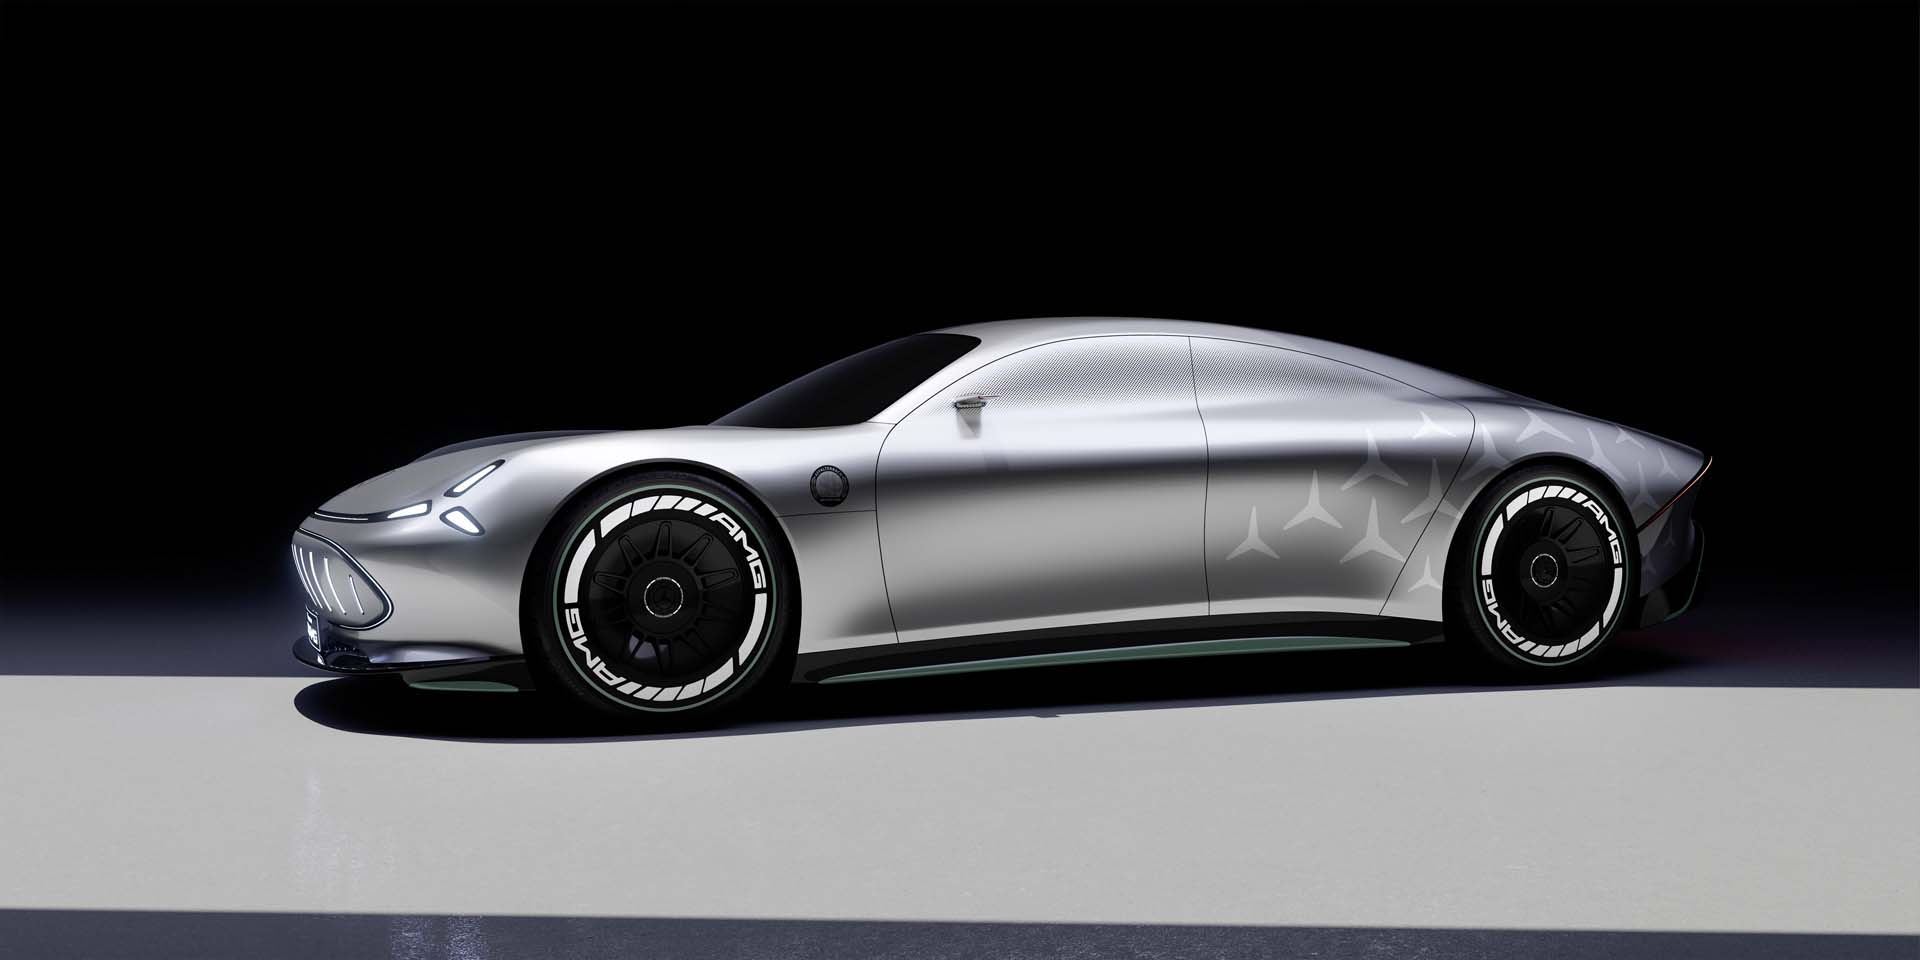 Mercedes Vision AMG electric sports car concept previews performance brand's EV future